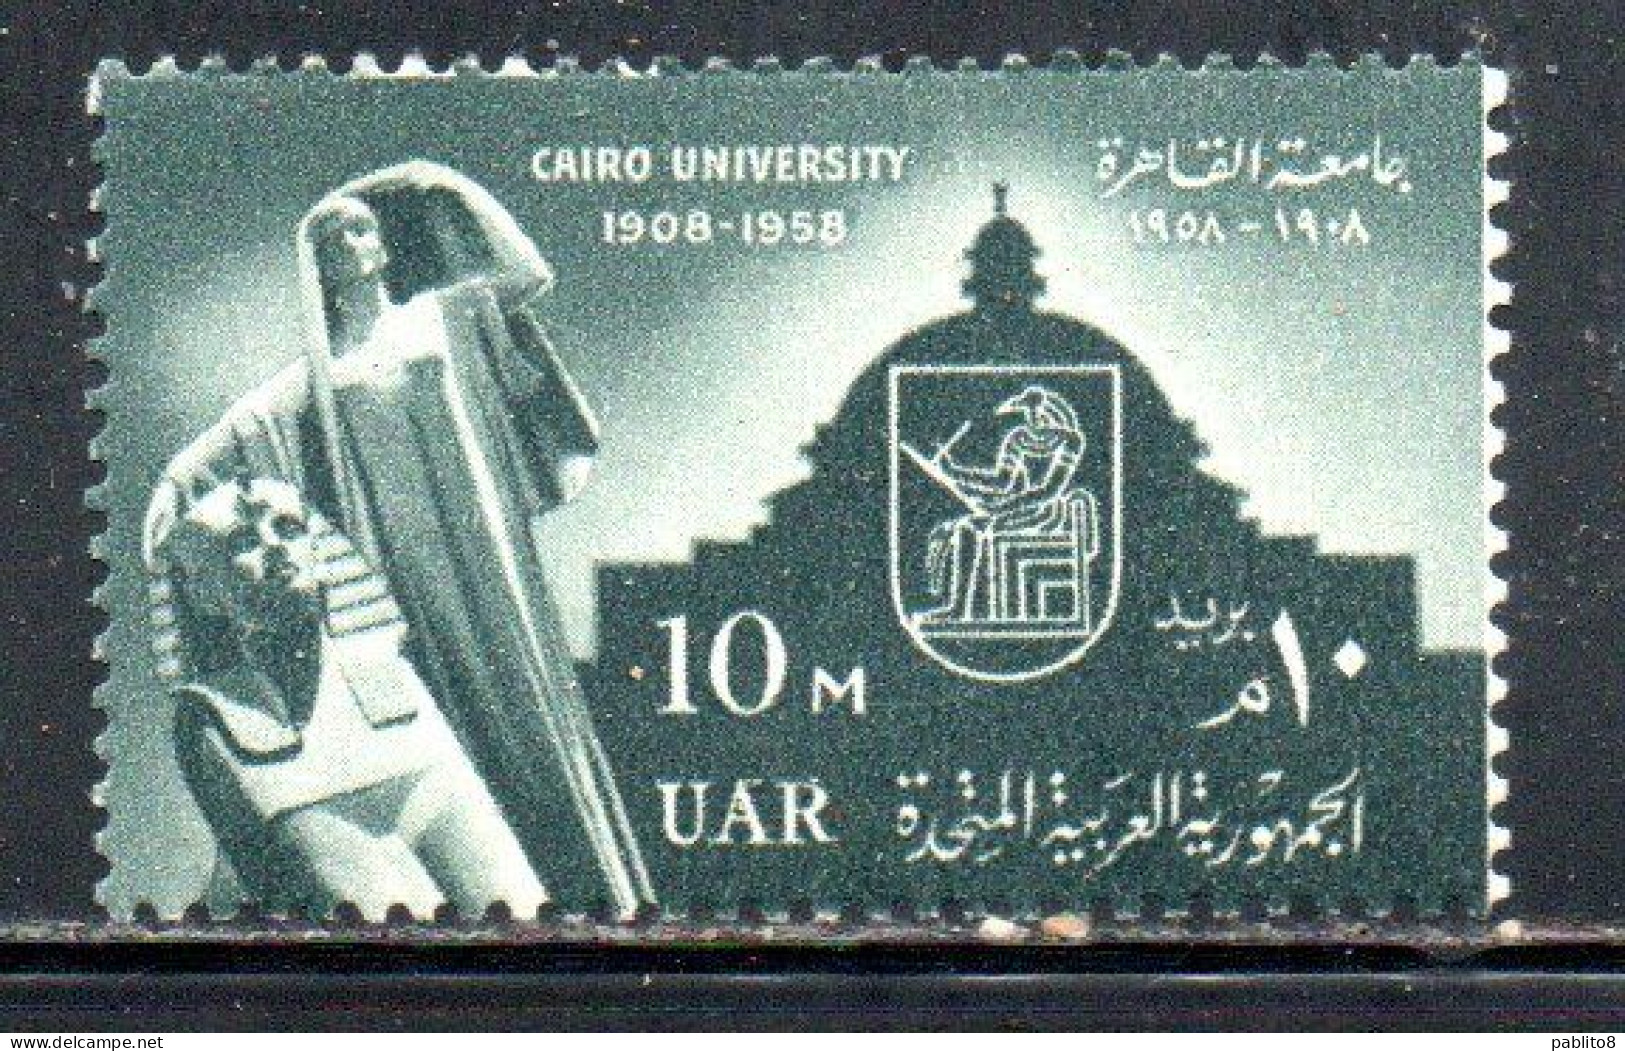 UAR EGYPT EGITTO 1958 50th ANNIVERSARY OF CAIRO UNIVERSITY 10m  MNH - Unused Stamps